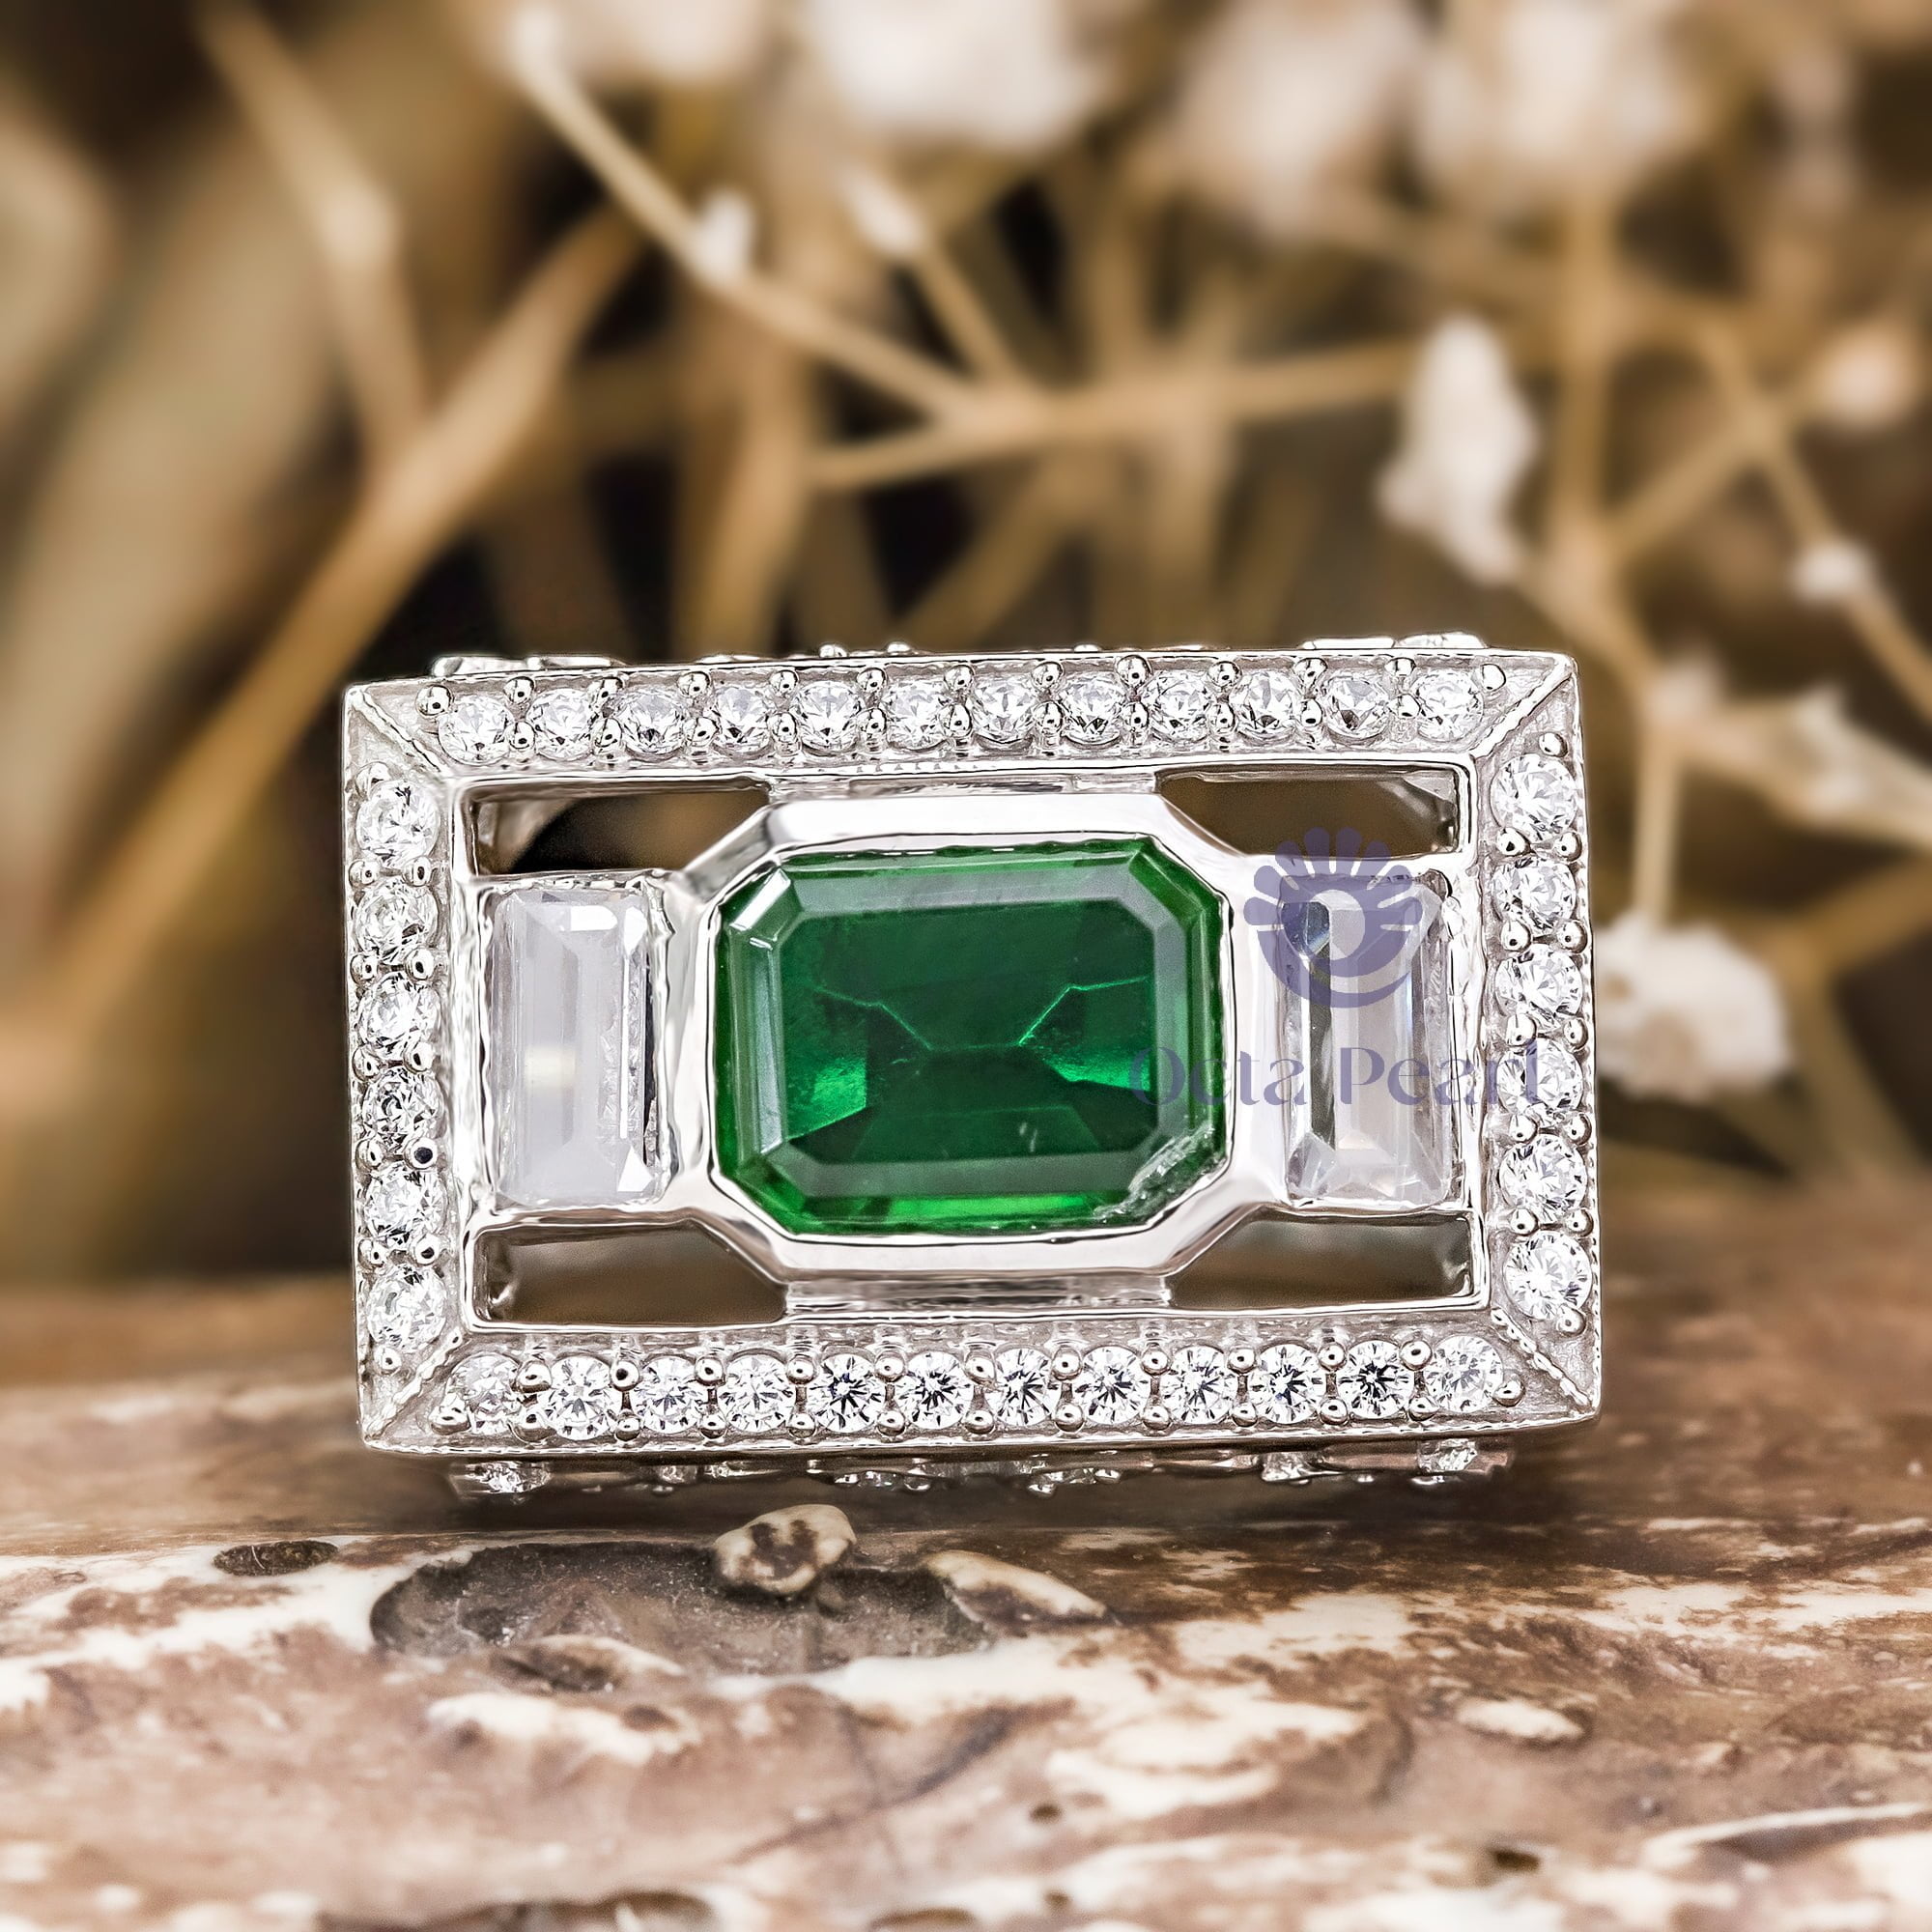 Filigree Vintage Art Deco Engagement Ring